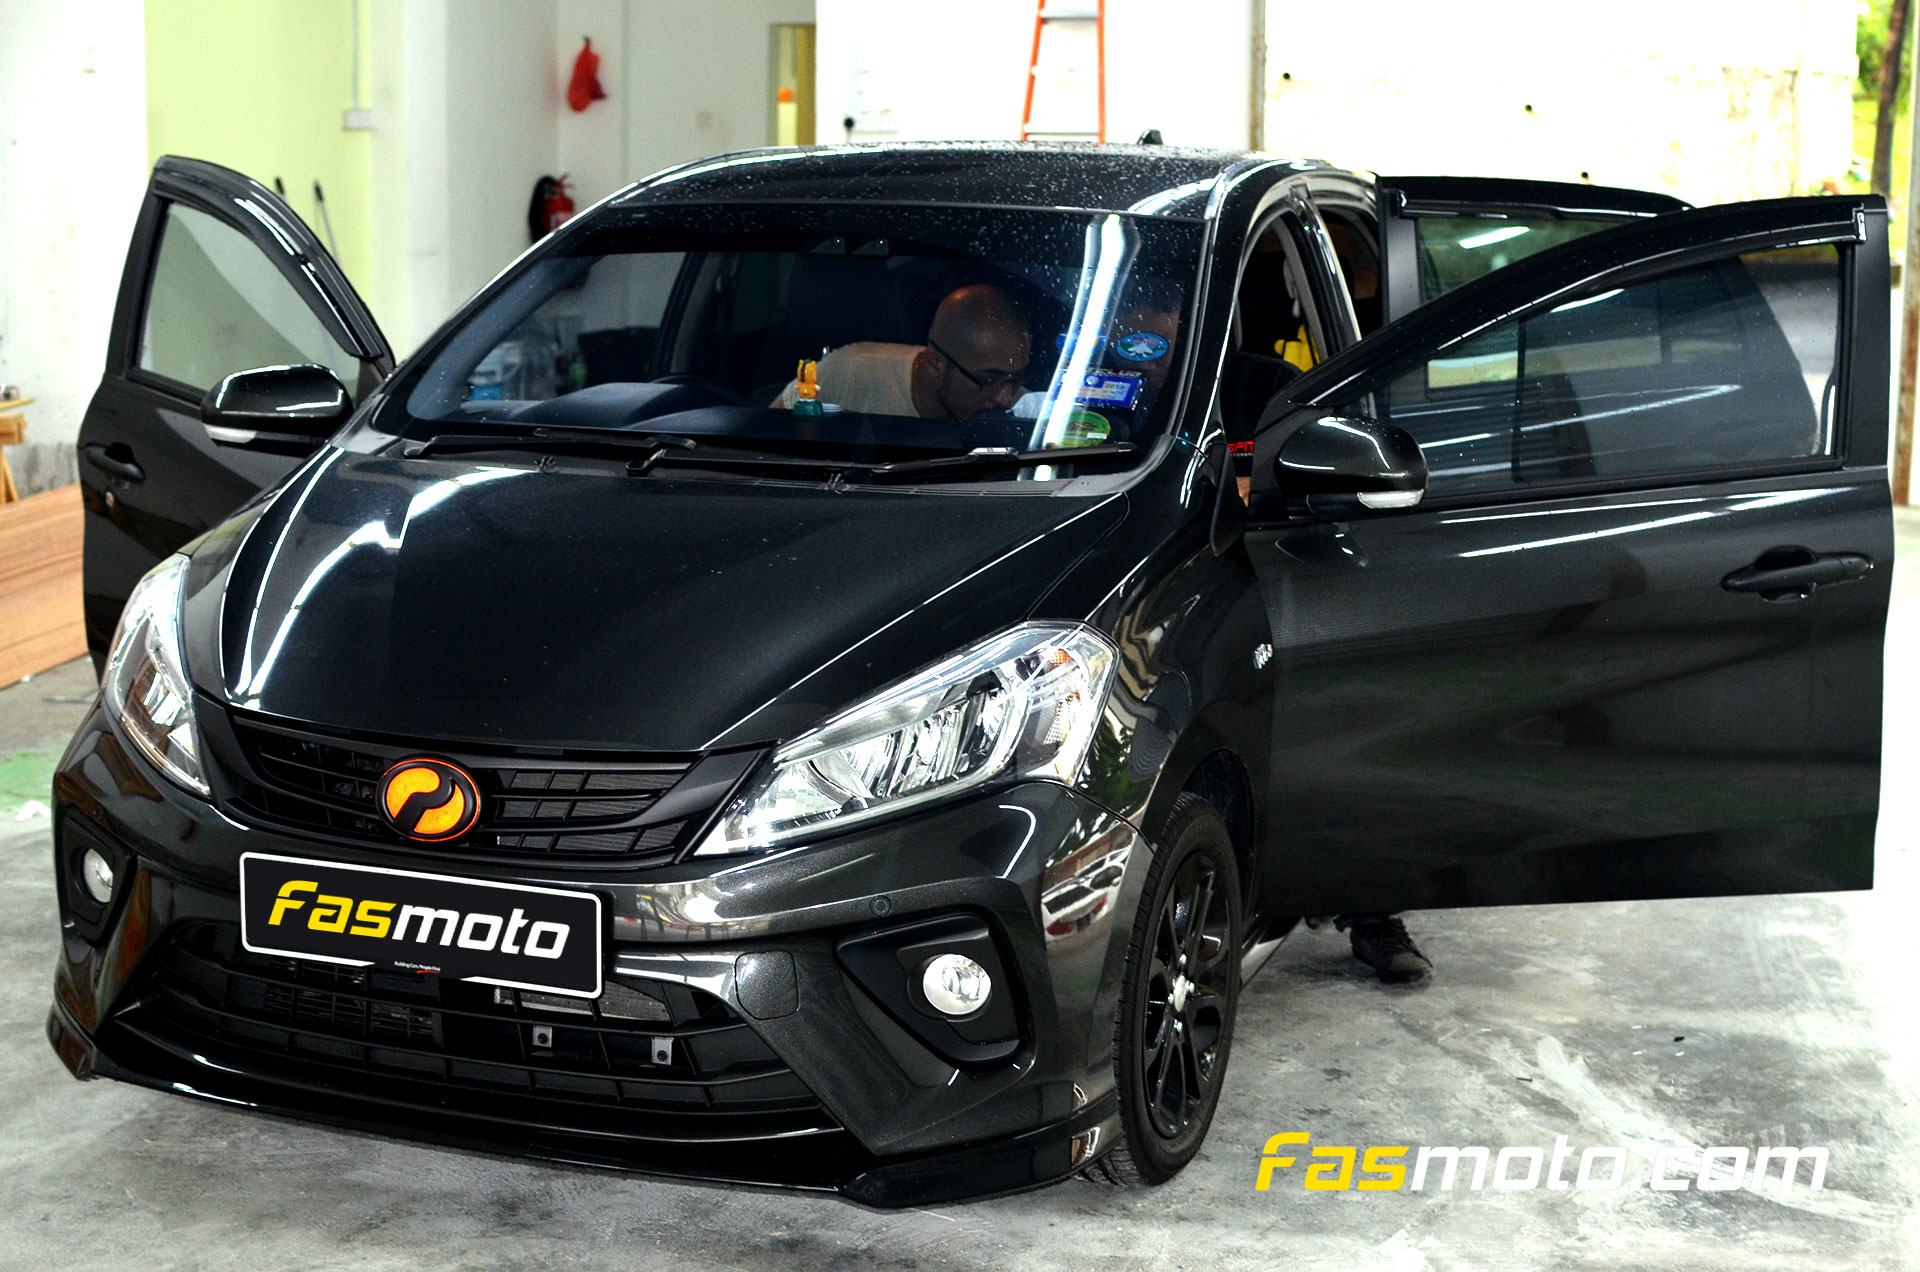 Hakim's Perodua Myvi Advance 3rd Generation front view